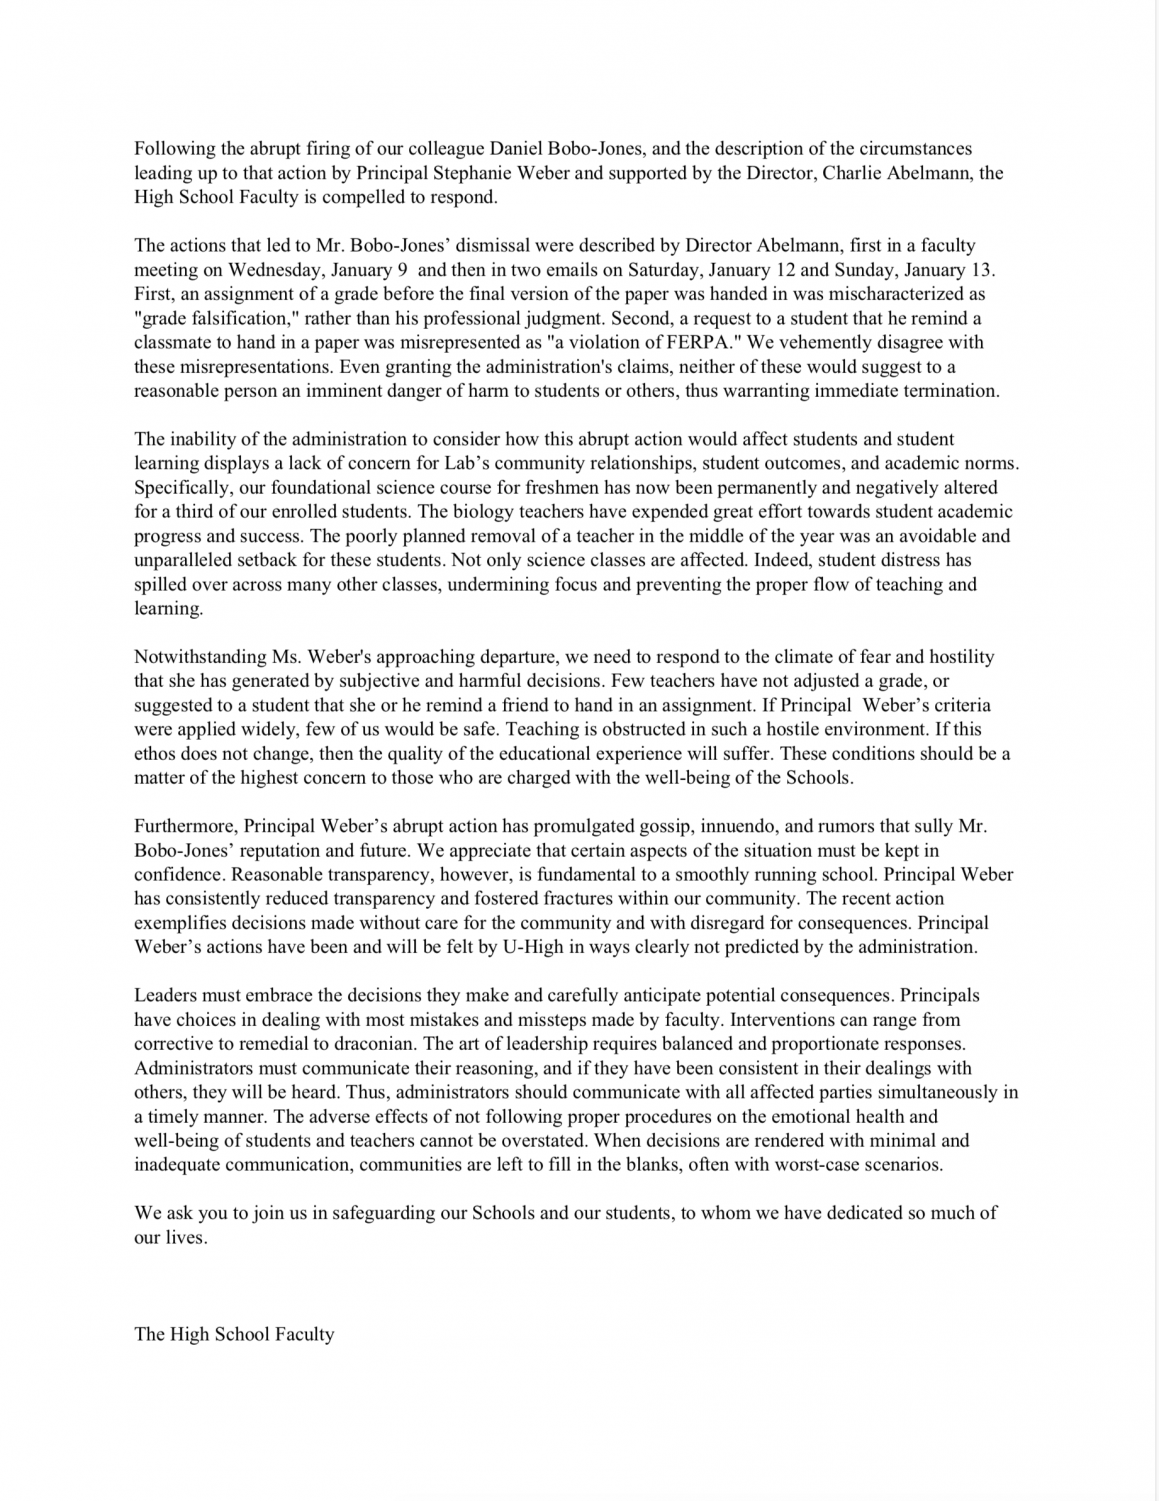 Letter from Lab Schools high school faculty, also in defense of Bobo-Jones